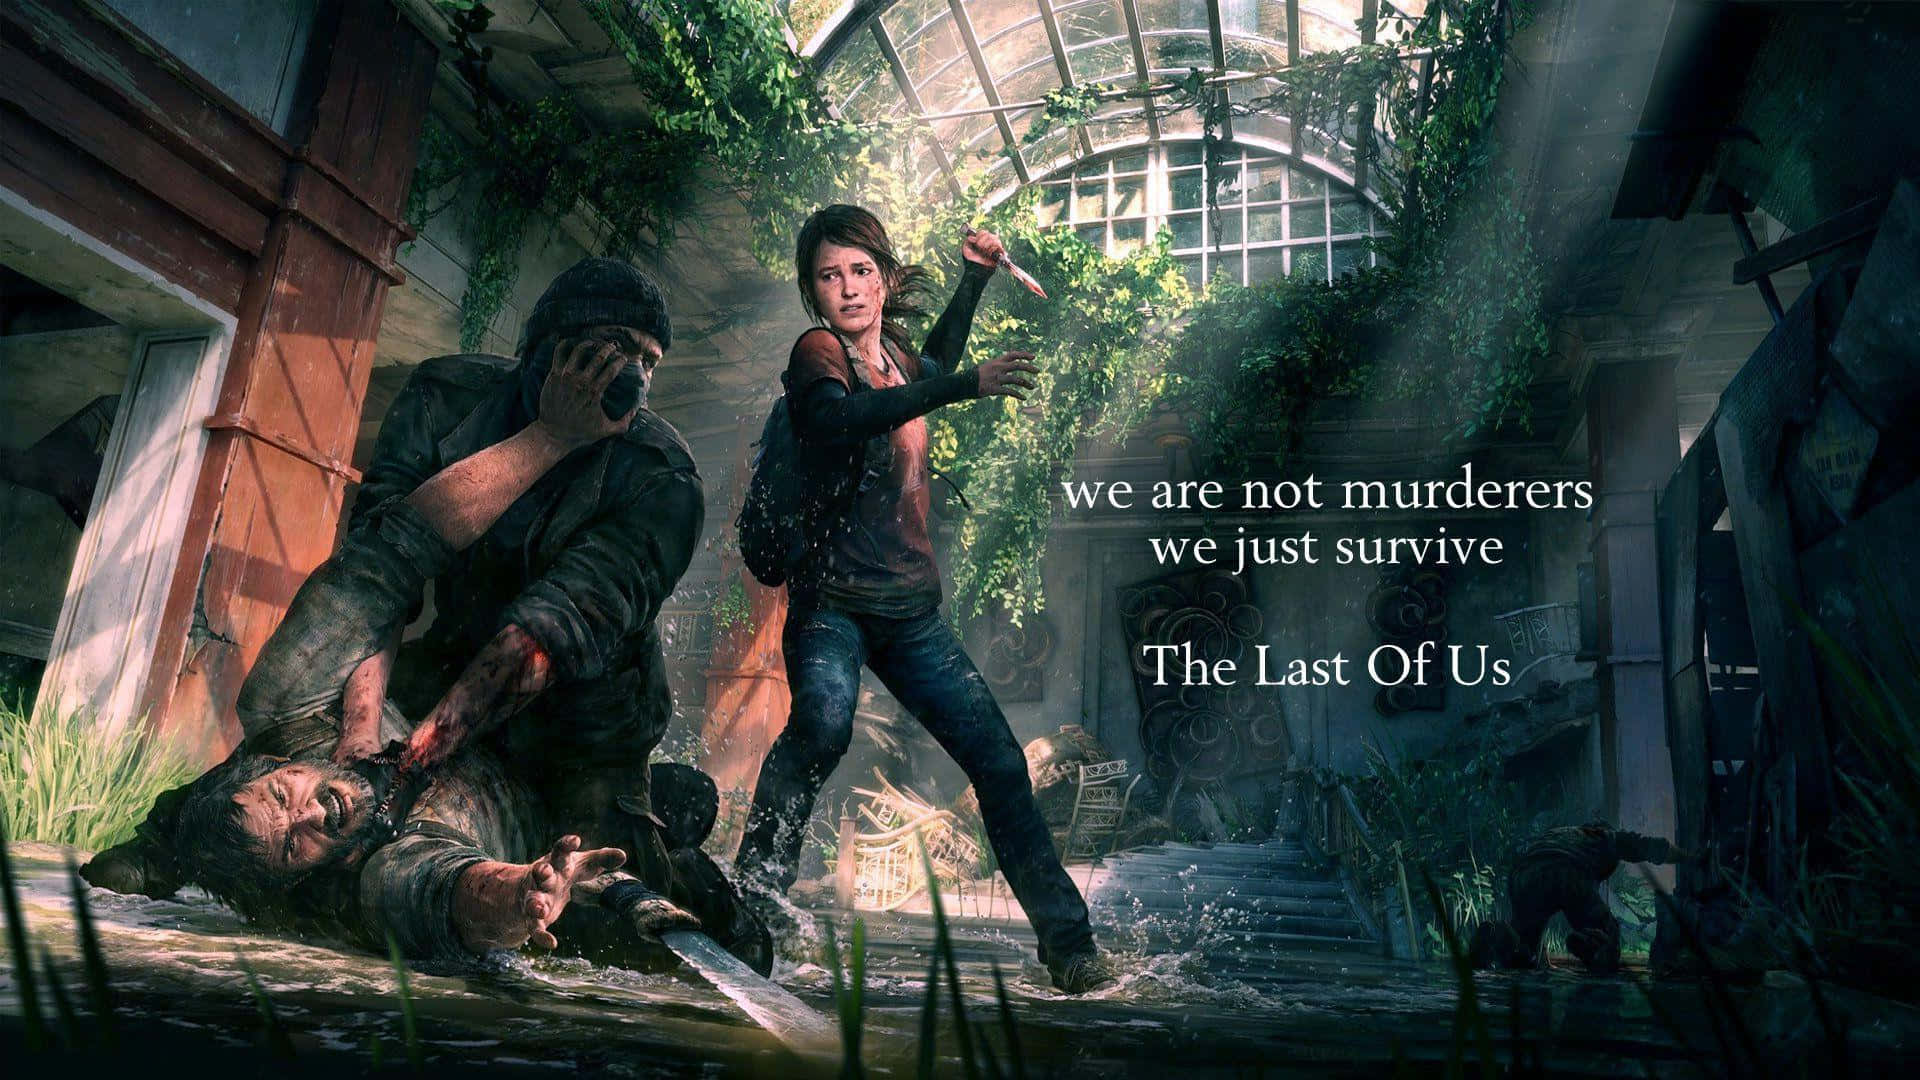 Joel The Last Of Us Wallpapers - Wallpaper Cave